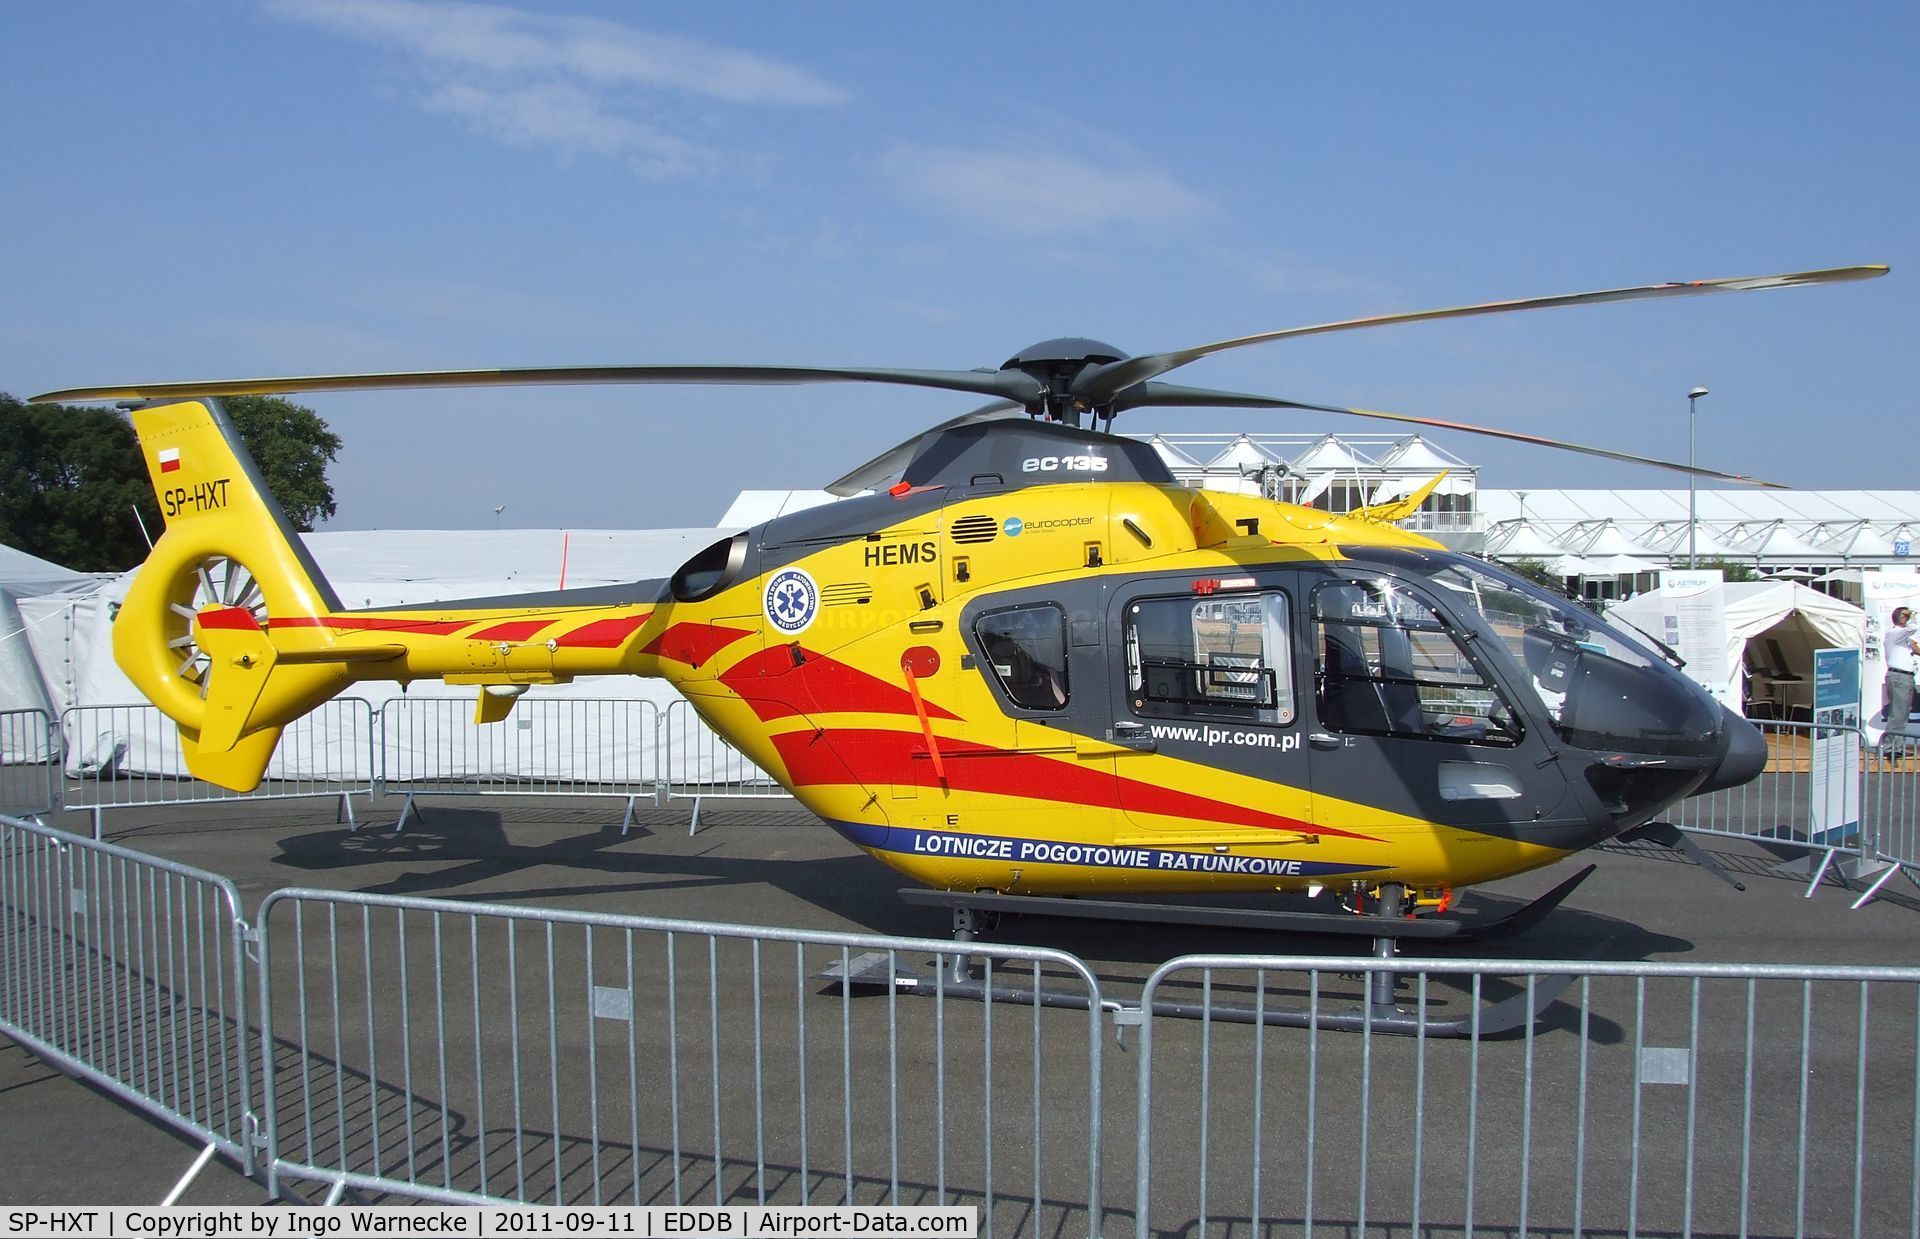 SP-HXT, 2010 Eurocopter EC-135P-2+ C/N 0932, Eurocopter EC13P2+ of polish EMS at the ILA 2012, Berlin